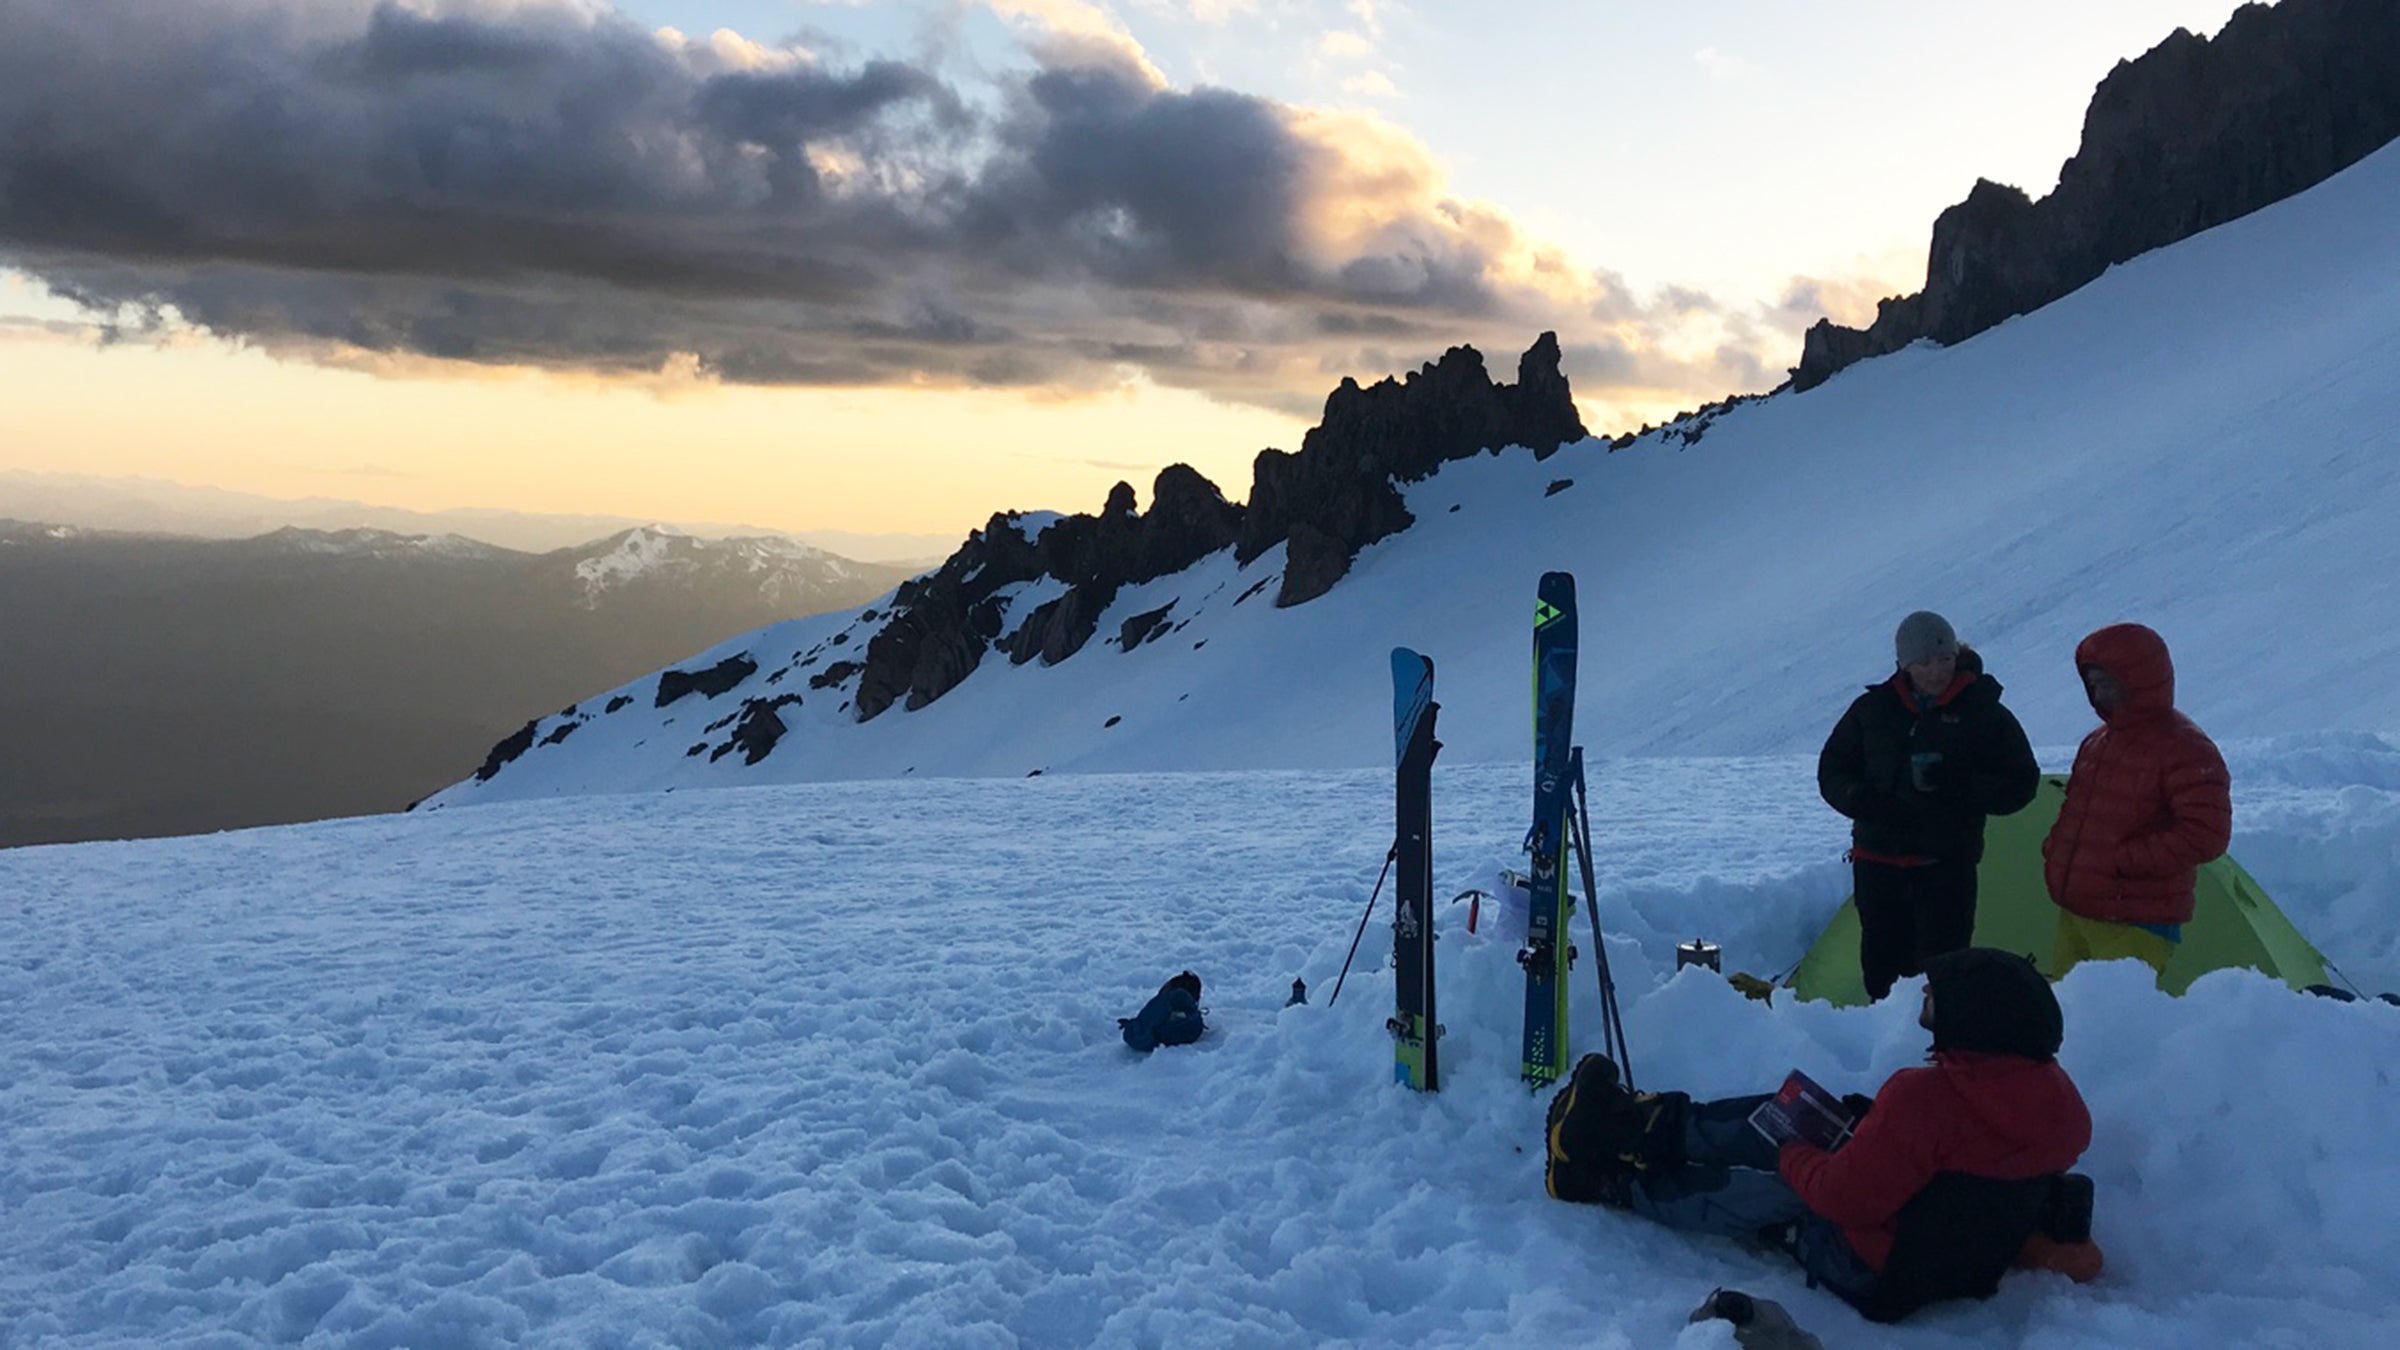 Mount Adams Southwest Chutes - World's Best Ski Descents - The Backcountry  Ski Touring Blog